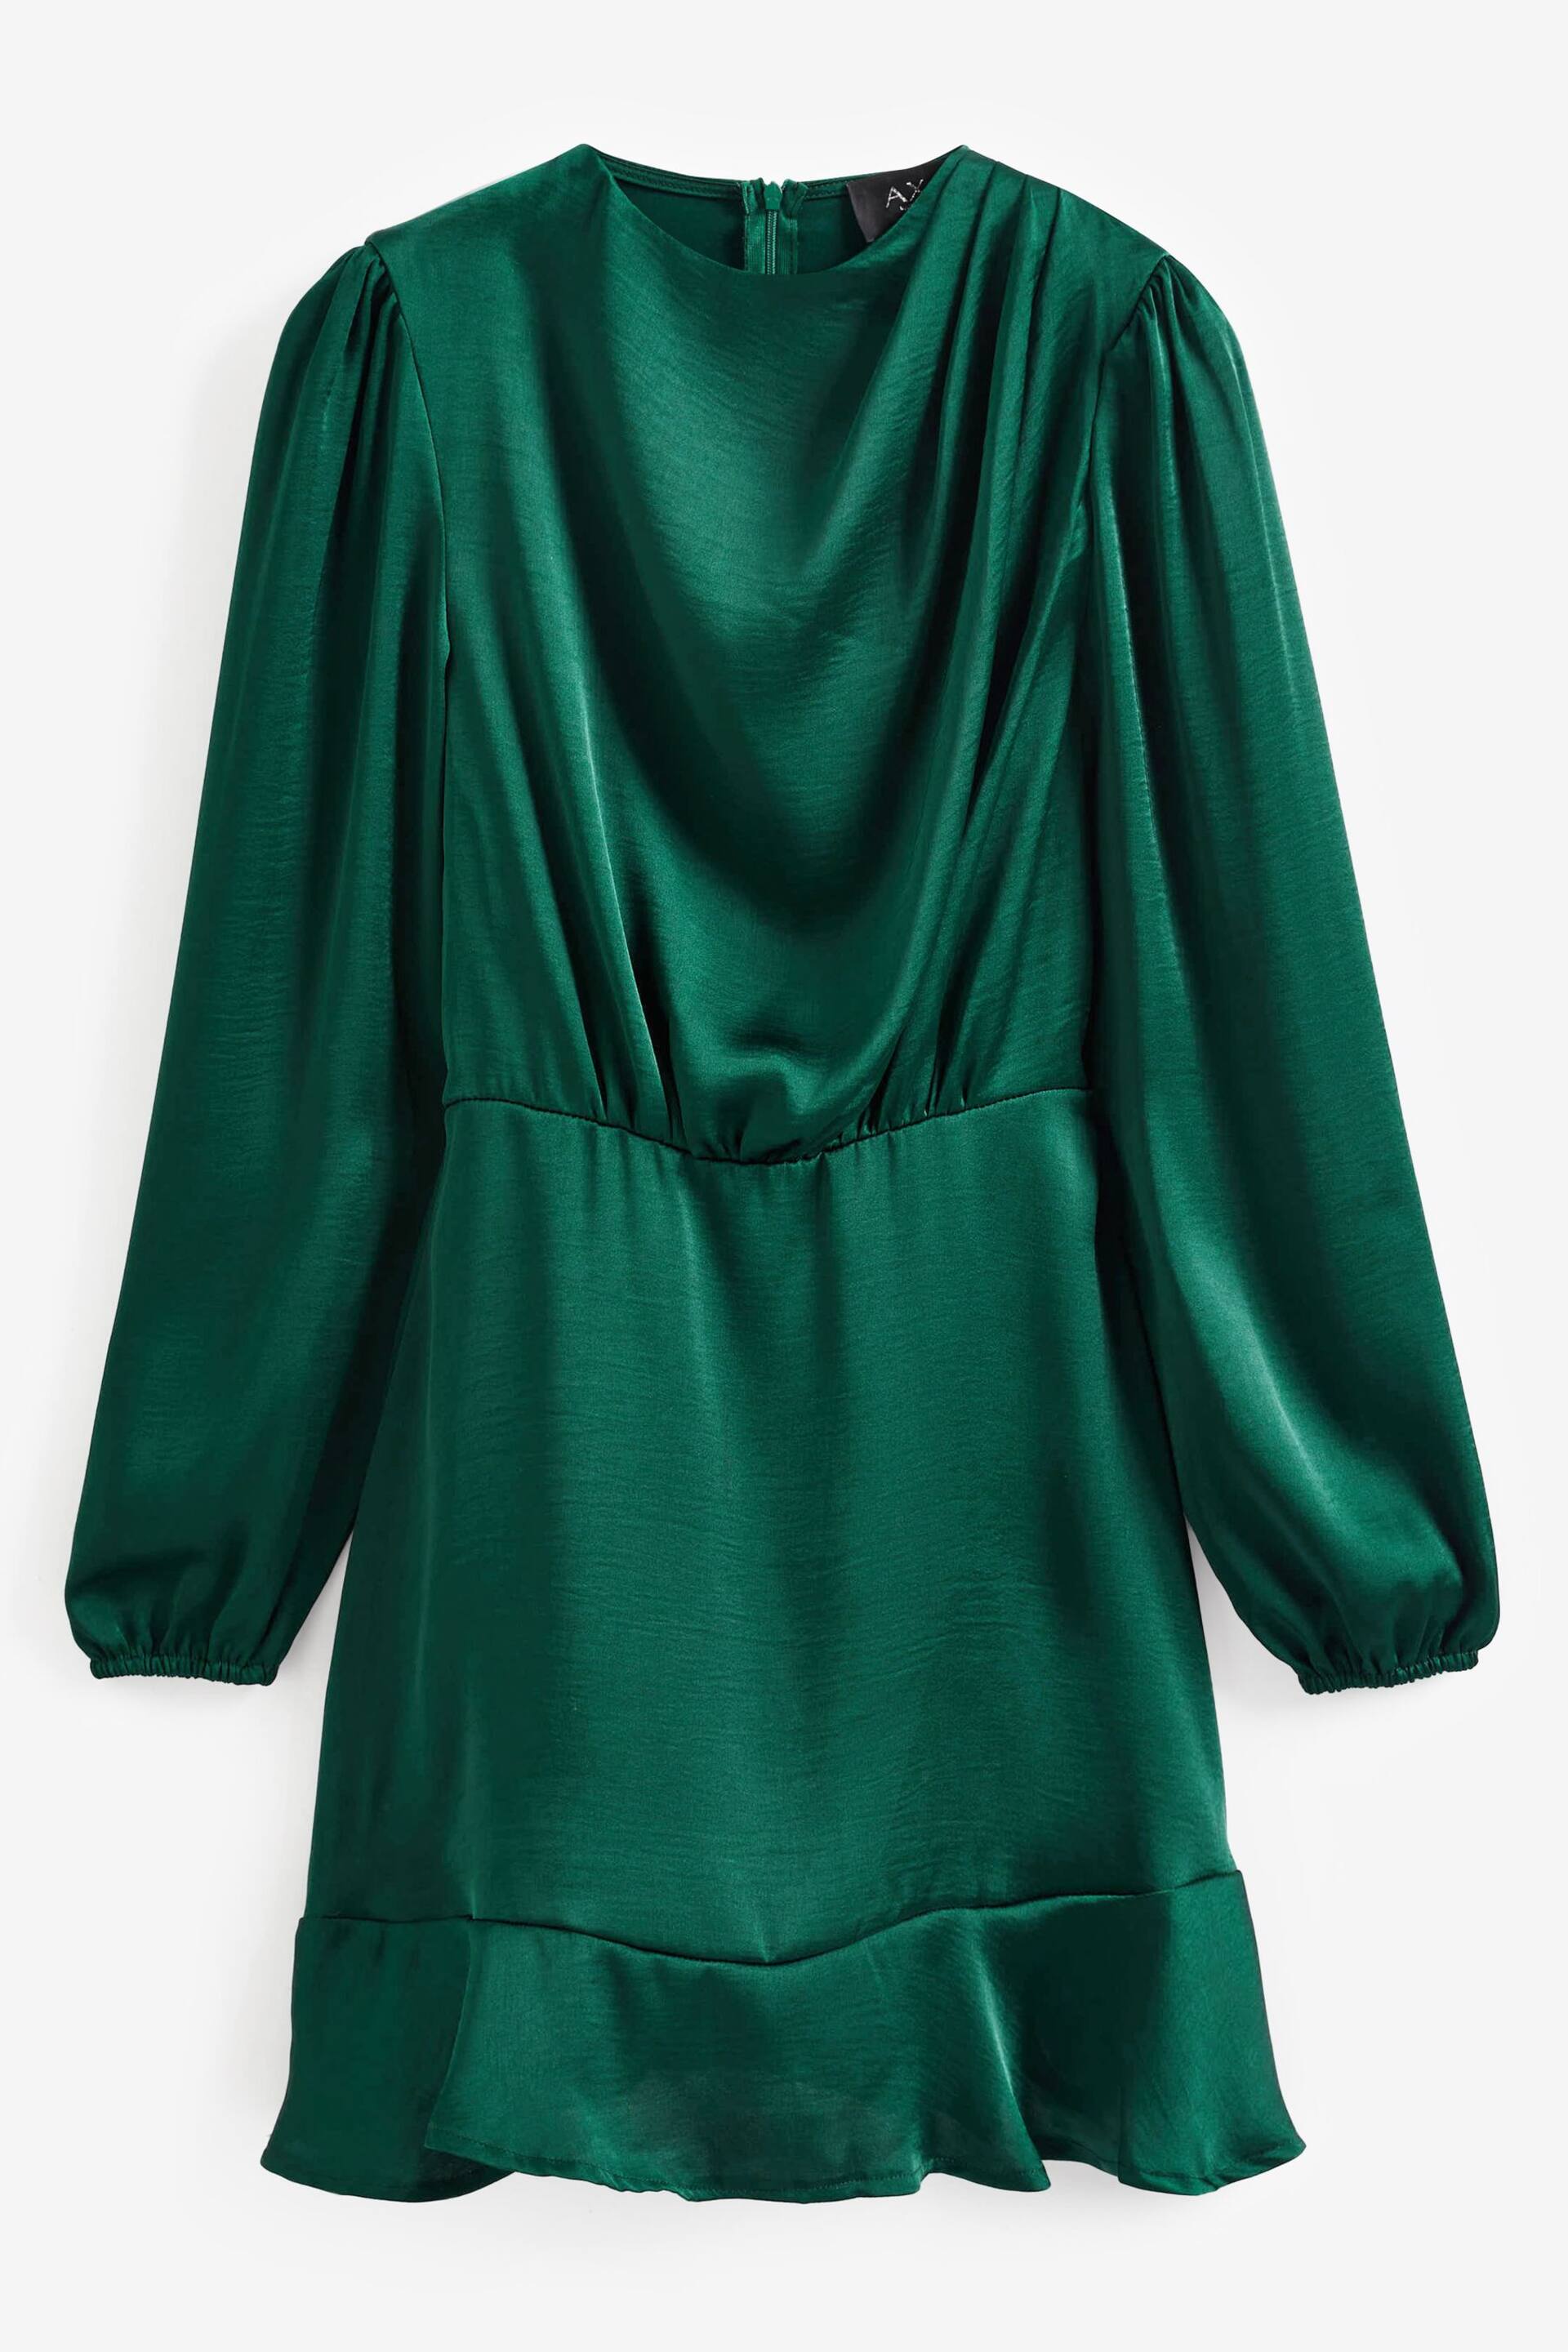 AX Paris Teal Green Green Satin Long Sleeve Pleated Shoulder Mini Dress - Image 5 of 5